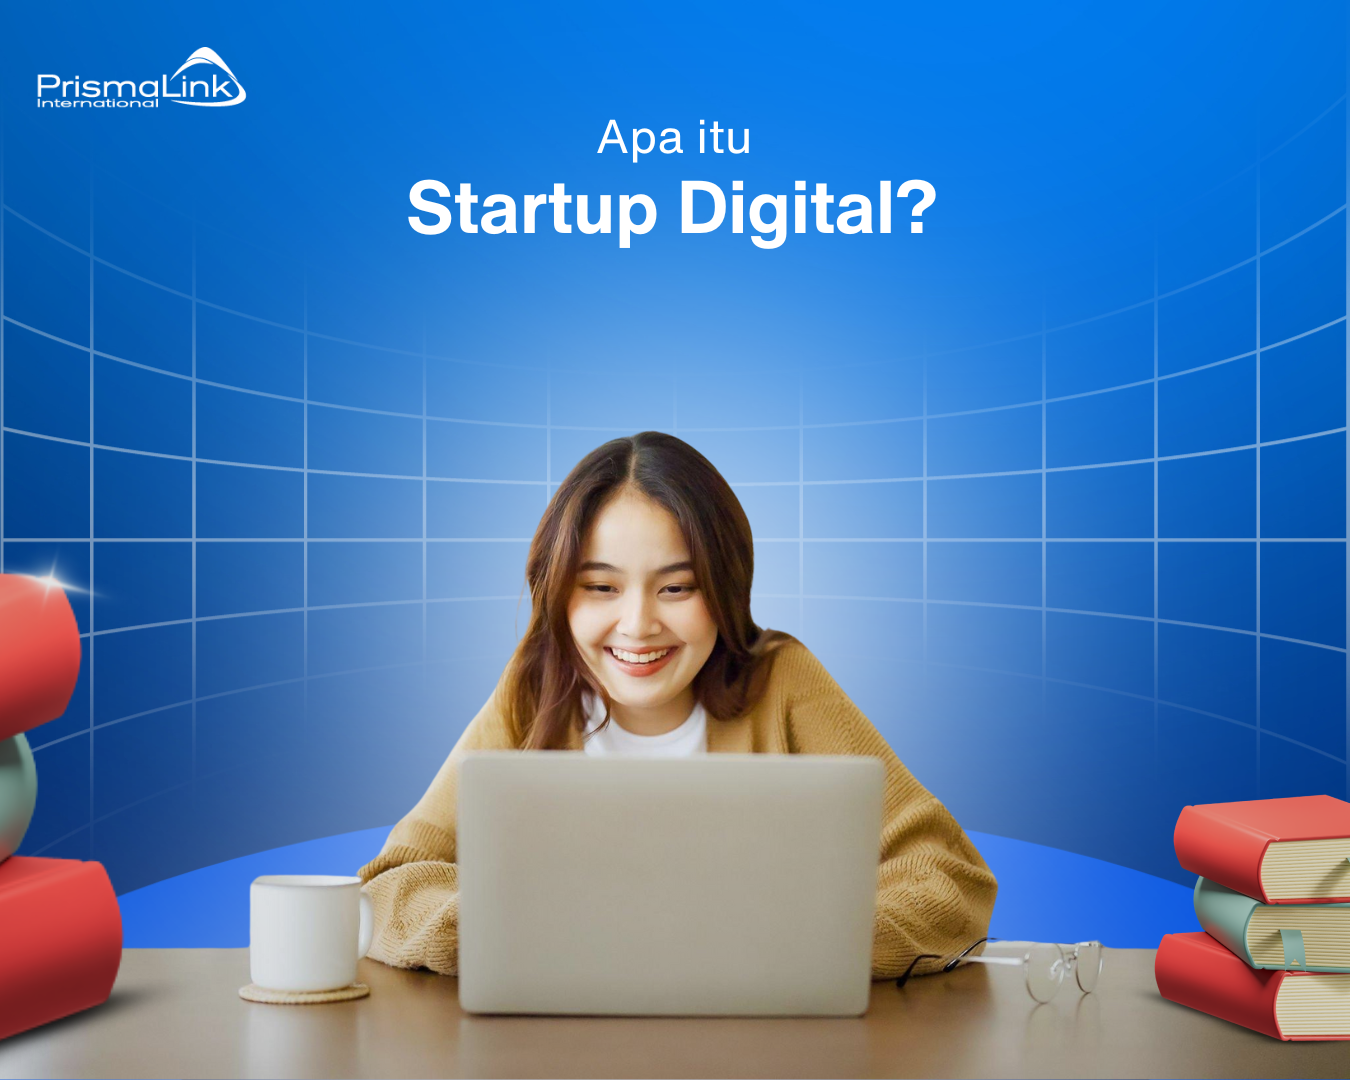 Startup Digital